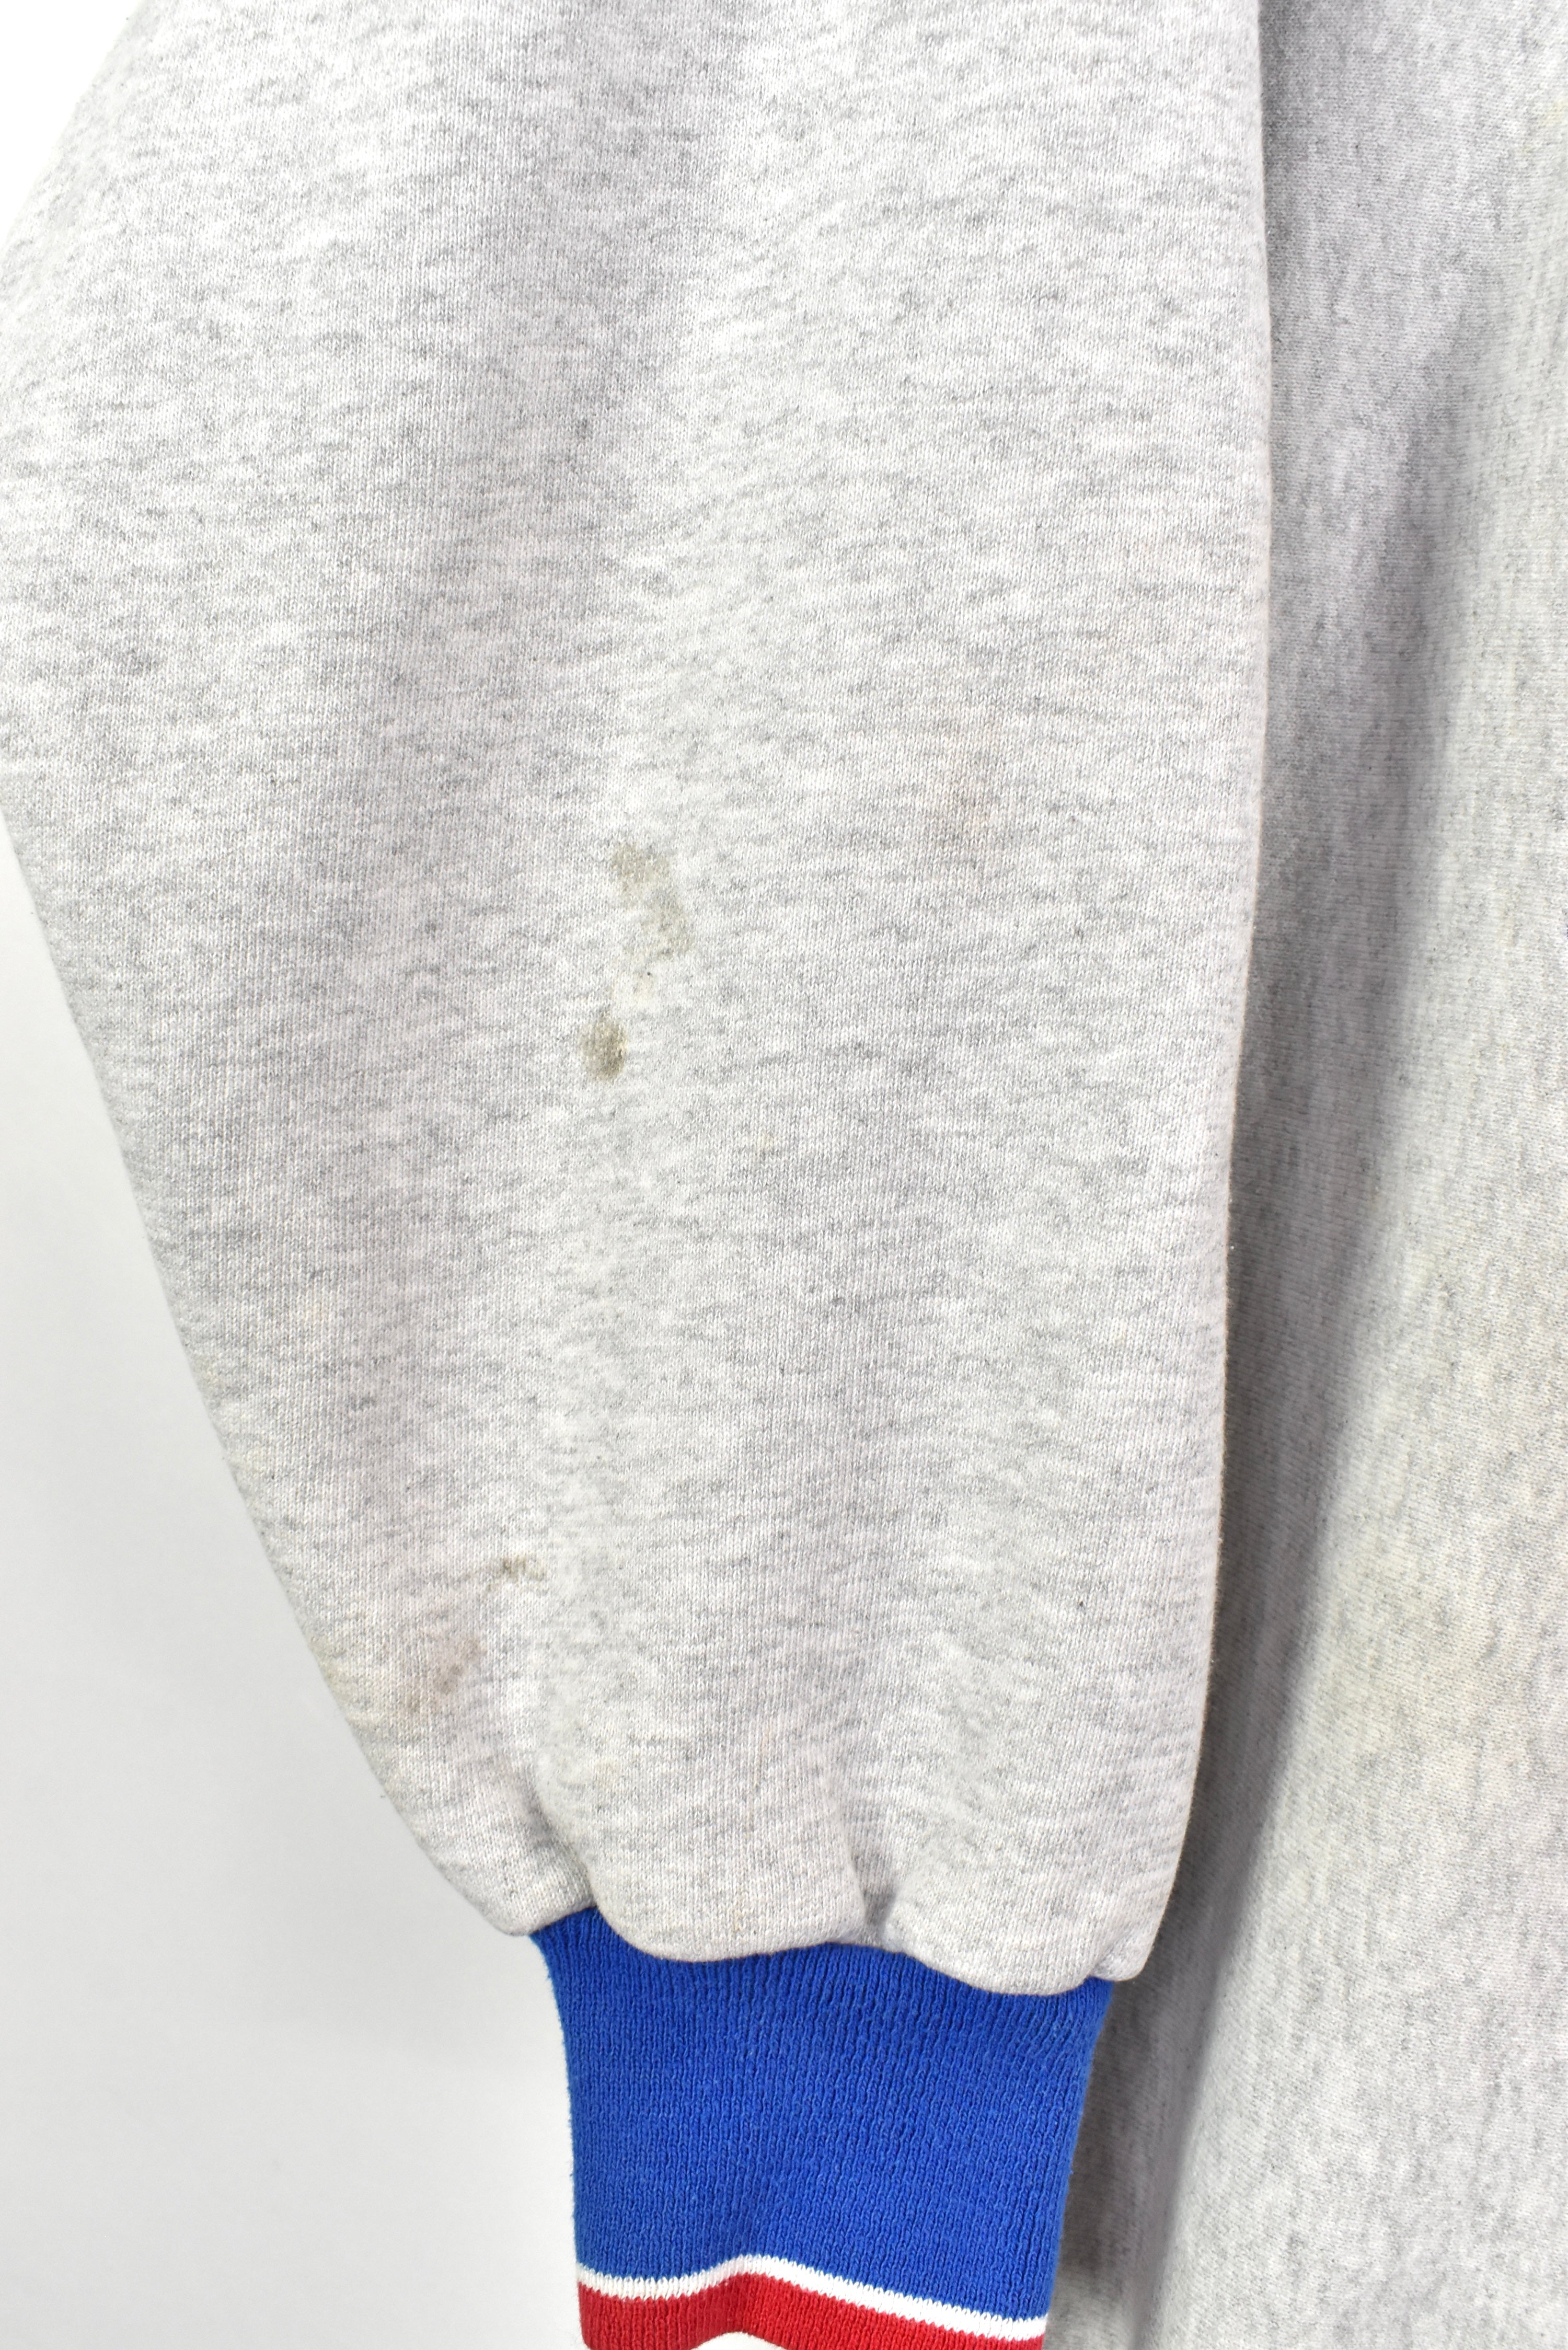 Vintage NFL New England Patriots embroidered grey sweatshirt | Large PRO SPORT